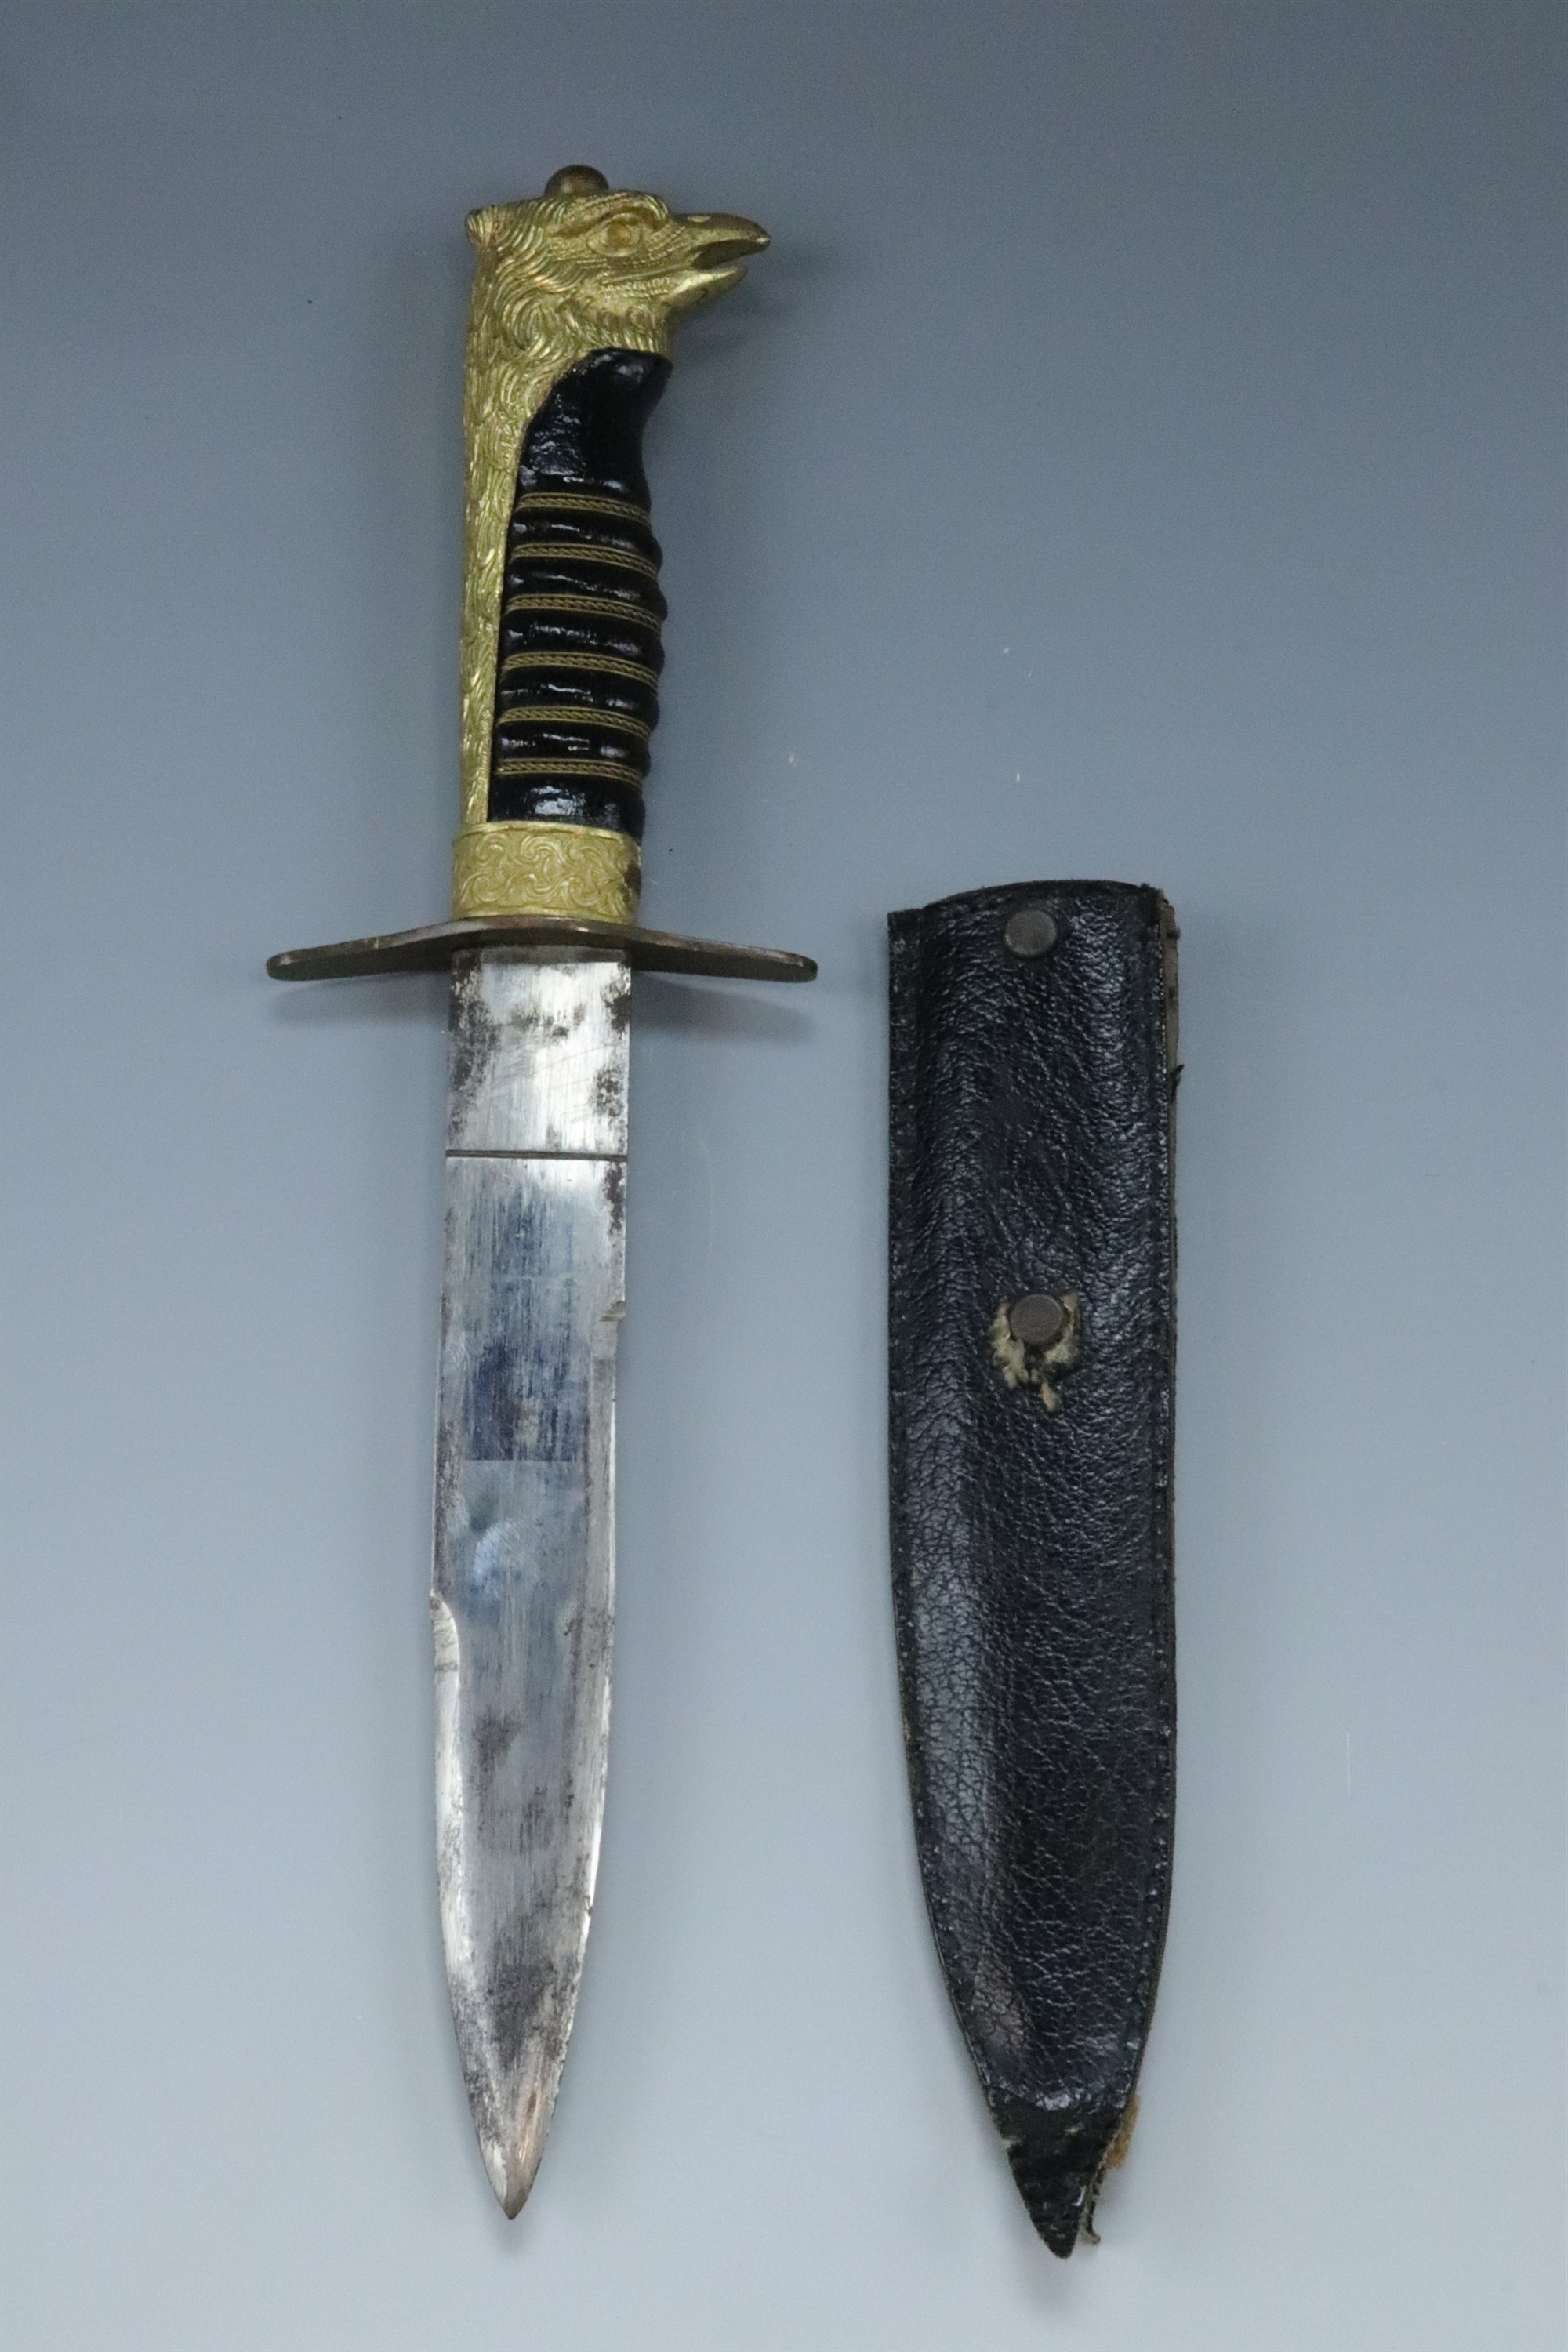 An Italian GIL / Fascist Youth dagger, 1930s - 1940s - Image 3 of 3